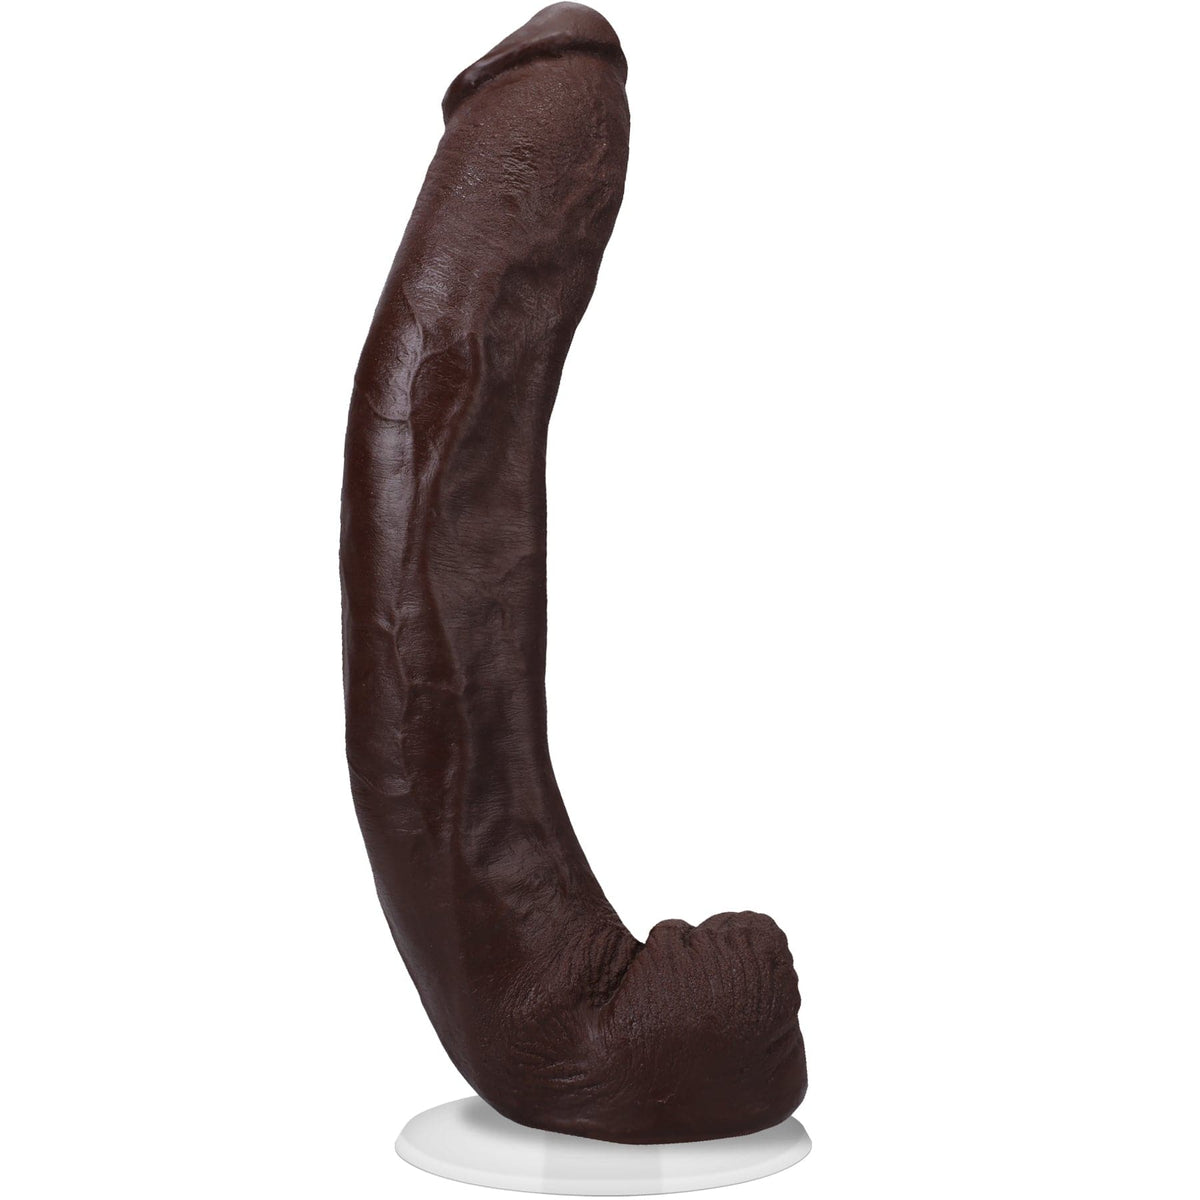 Signature Cocks - Dredd - Polla Ultraskyn de 13,5 pulgadas con ventosa extraíble Vac-U-Lock - Chocolate